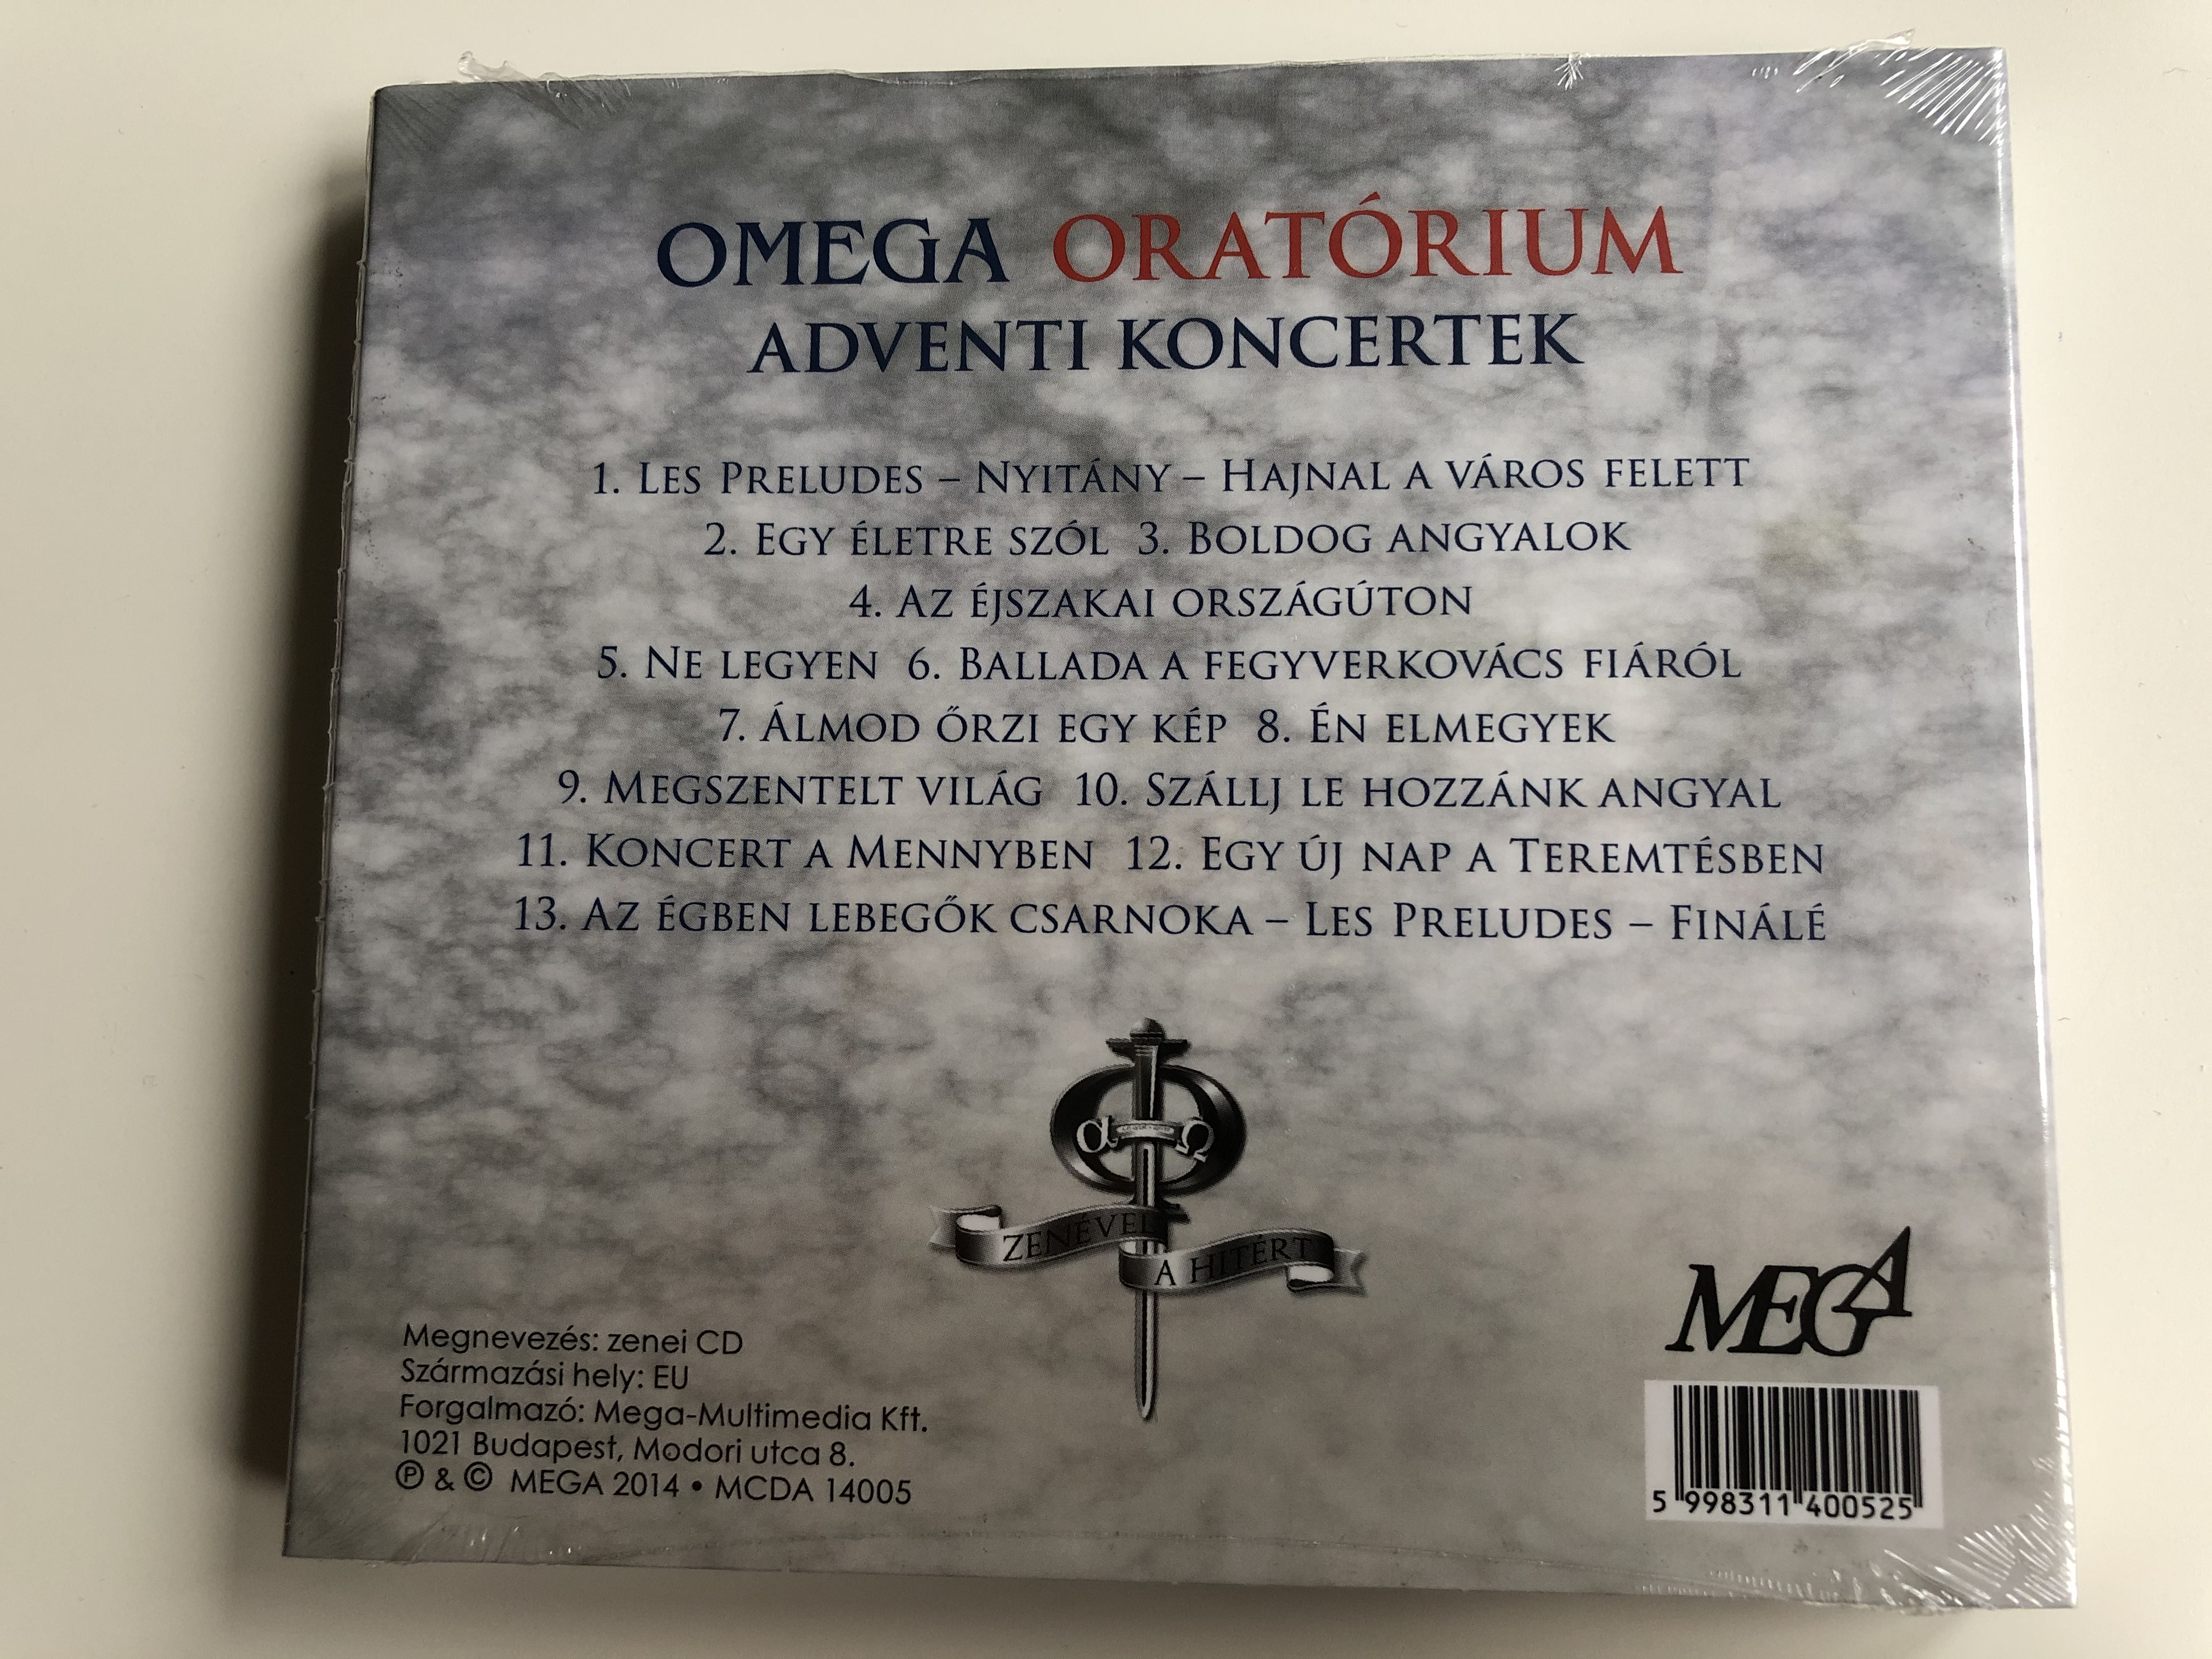 omega-orat-rium-adventi-koncertek-mega-audio-cd-2014-mcda-14005-2-.jpg